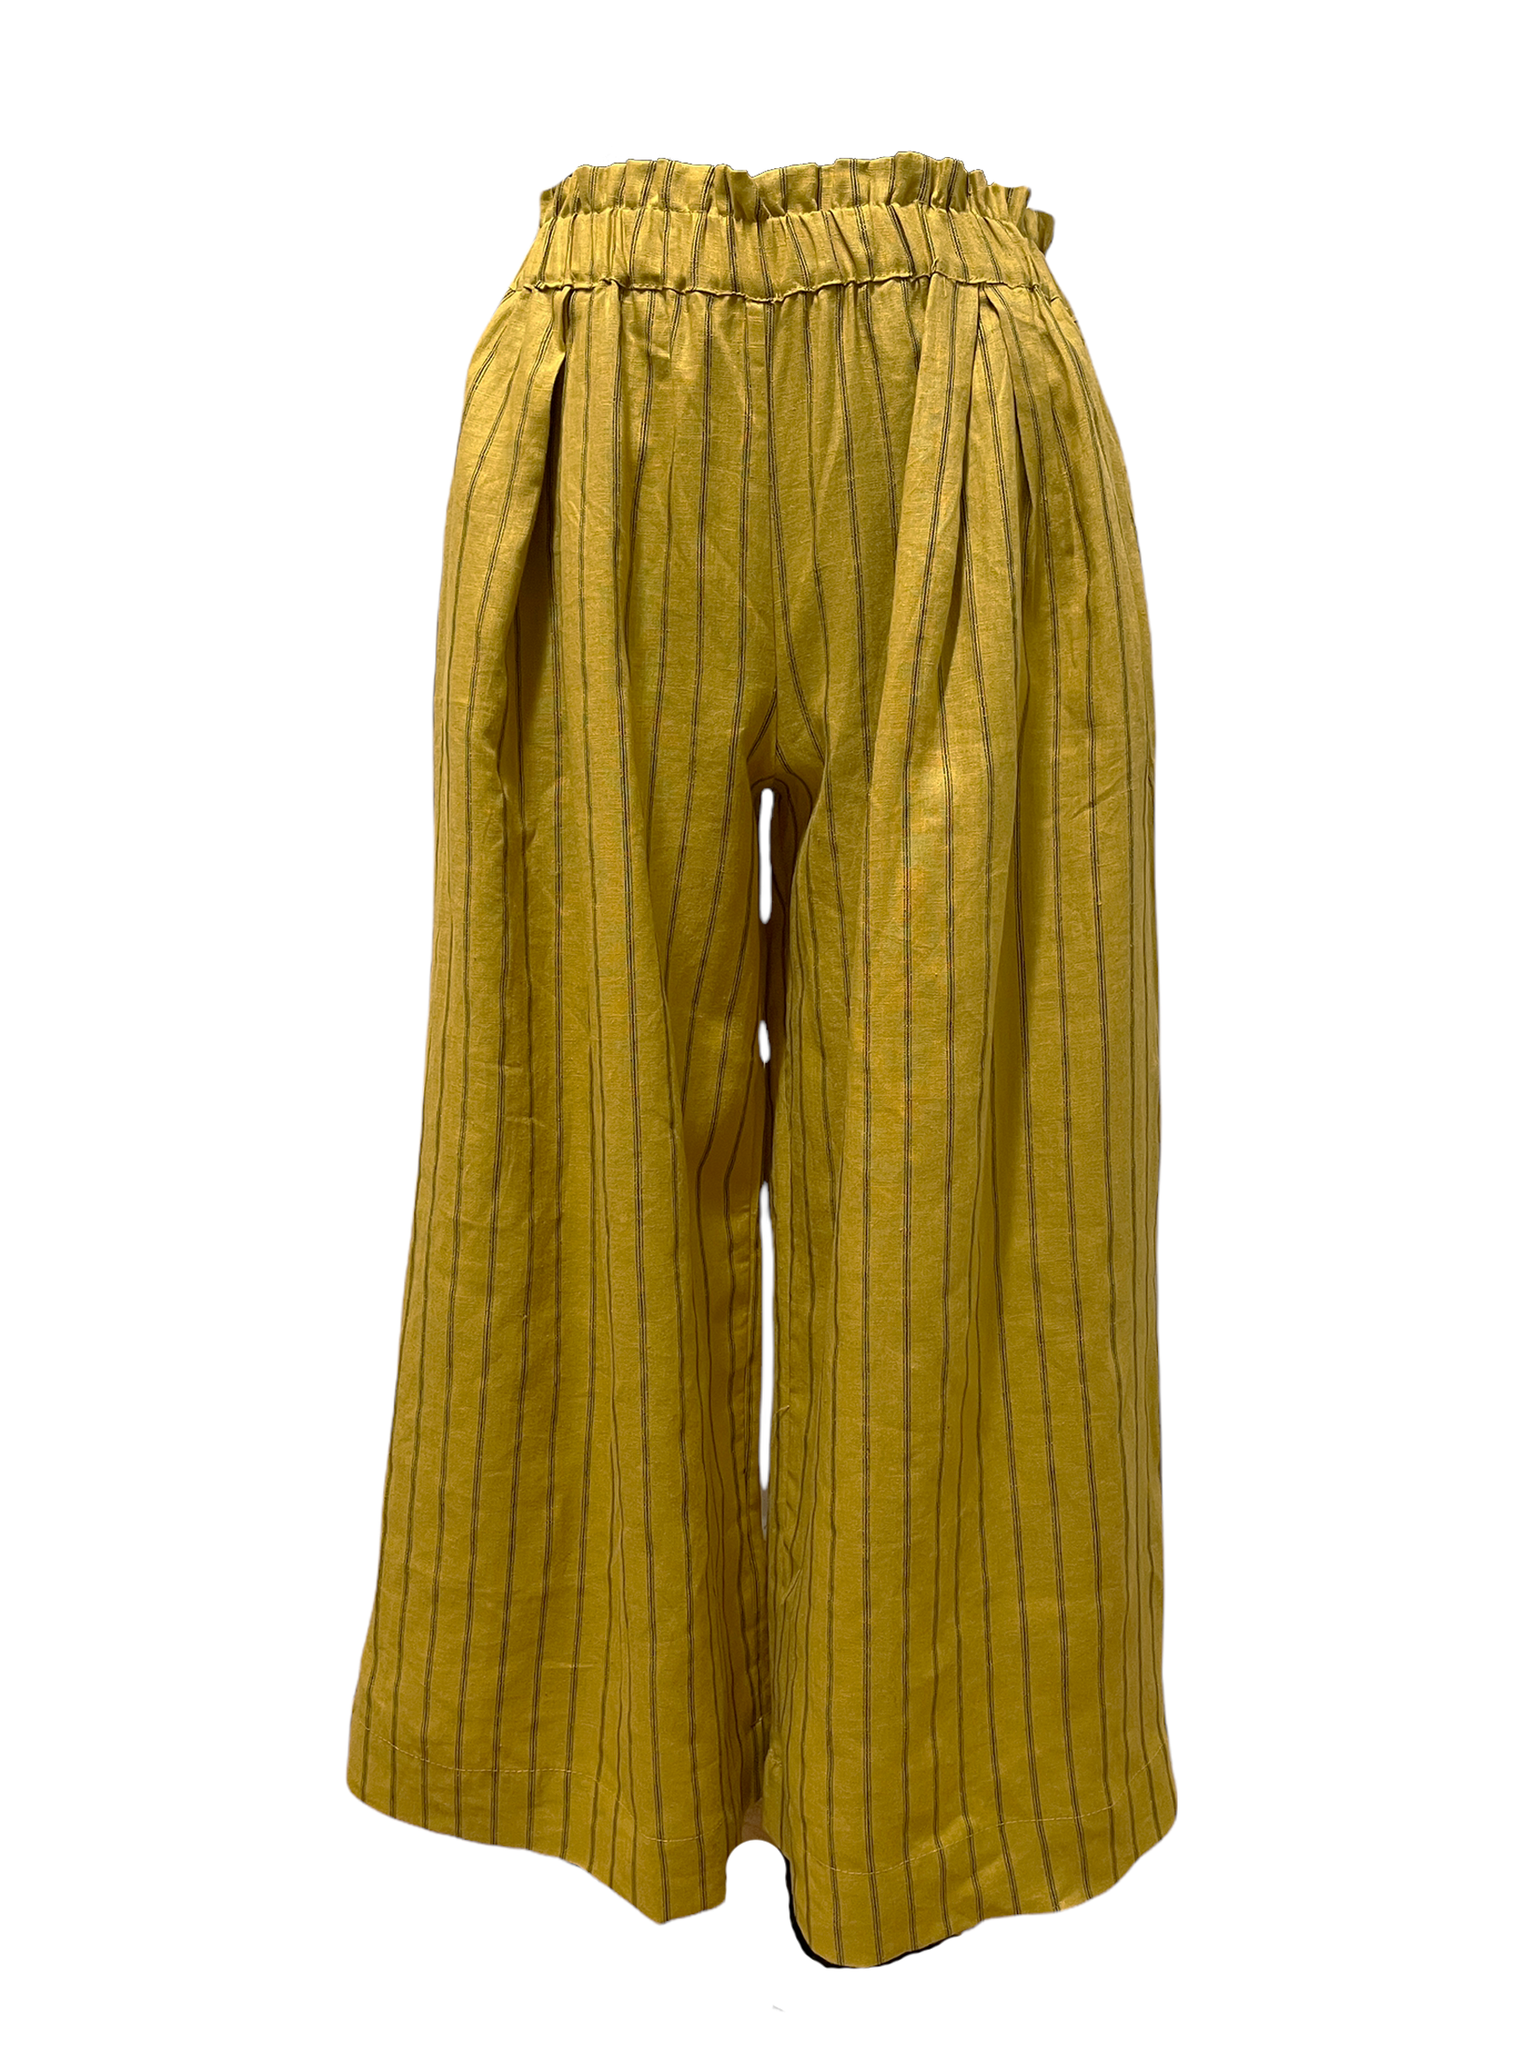 Striped Yellow Pant